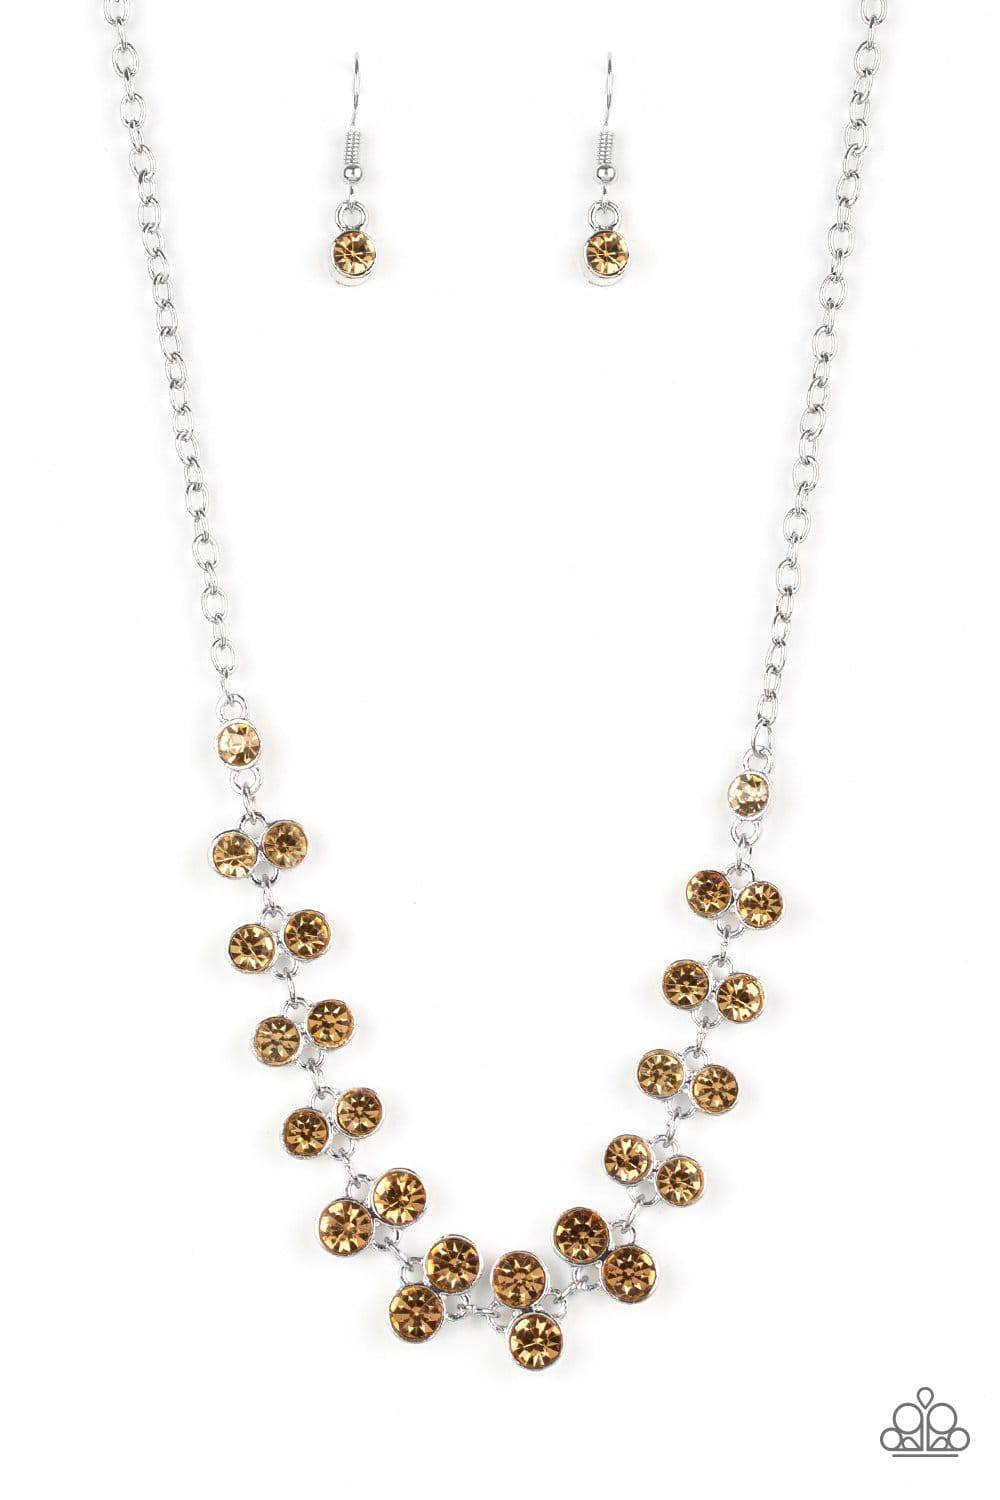 Super Starstruck - Brown Topaz Rhinestone Necklace - Paparazzi Accessories - GlaMarous Titi Jewels